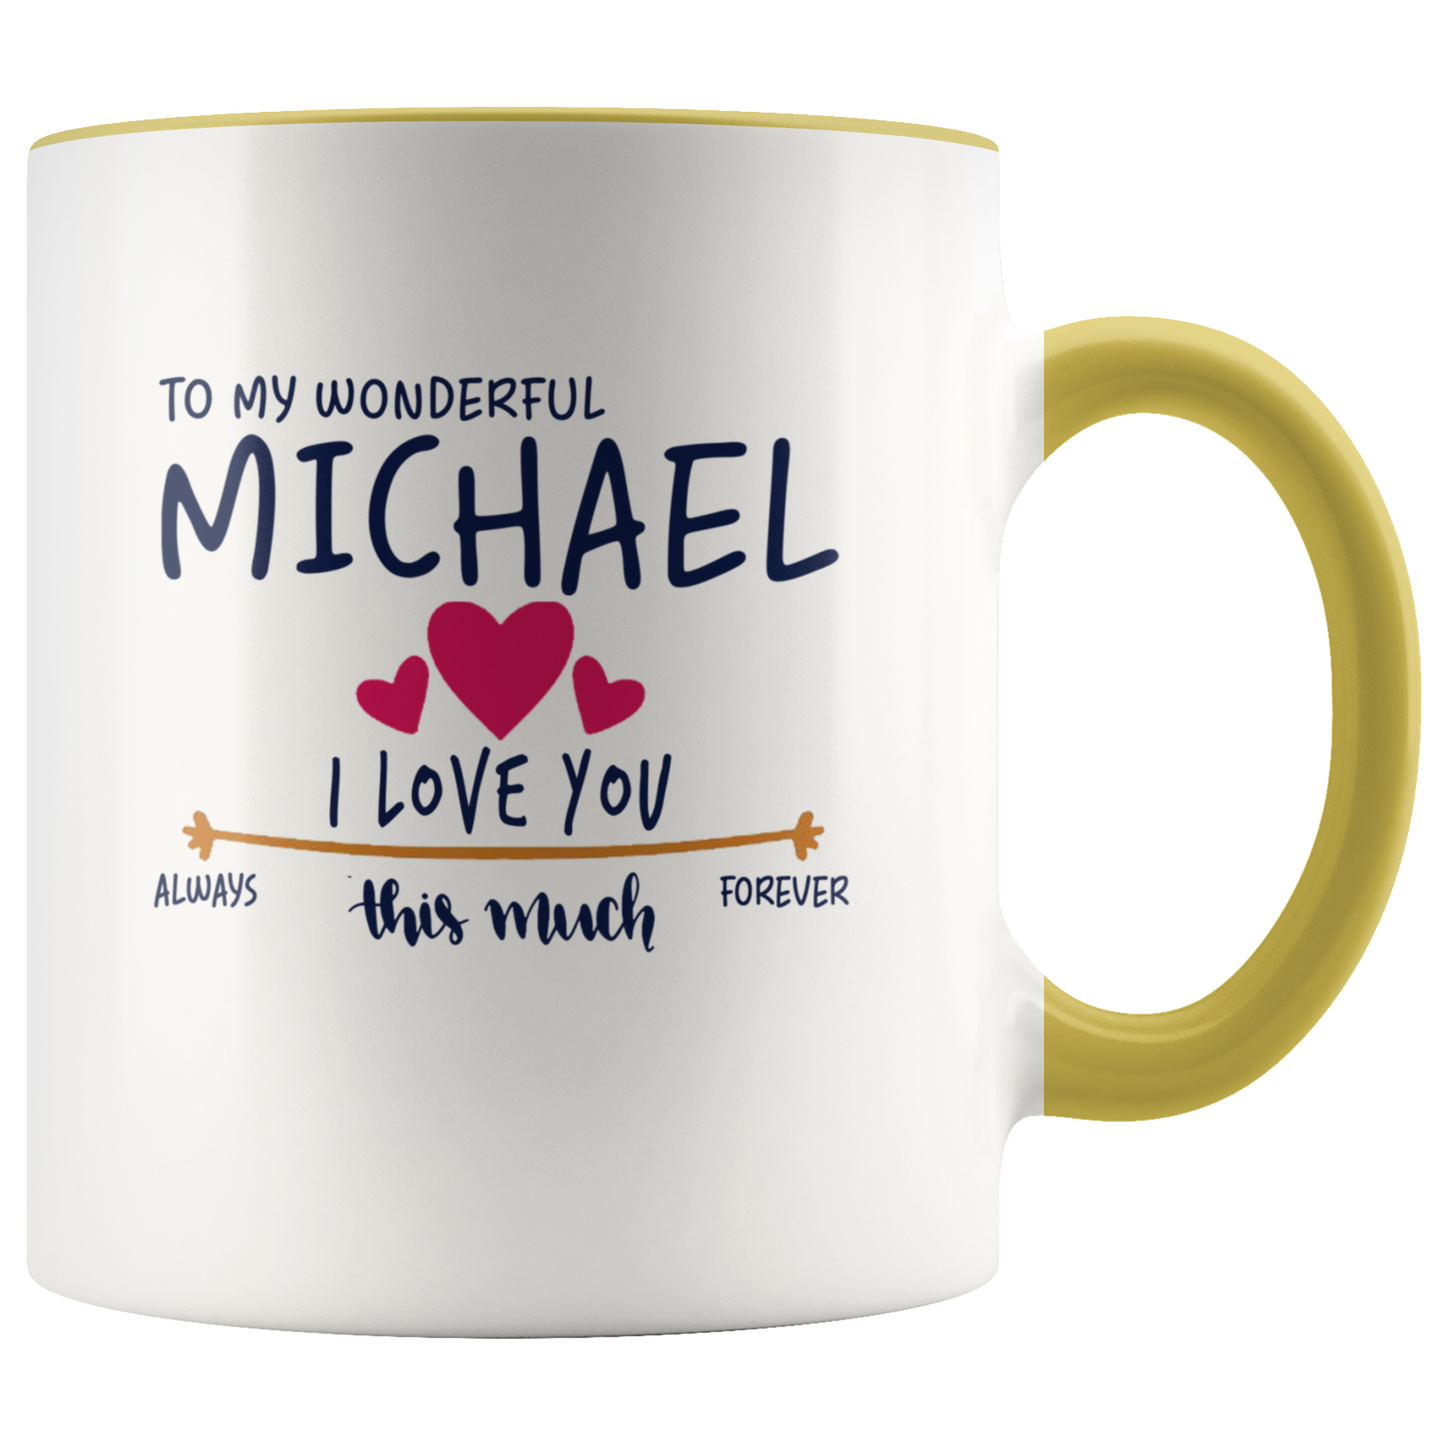 M-21259685-sp-23195 - Valentines Day Coffee Mug With Name Michael - To My Wonderfu